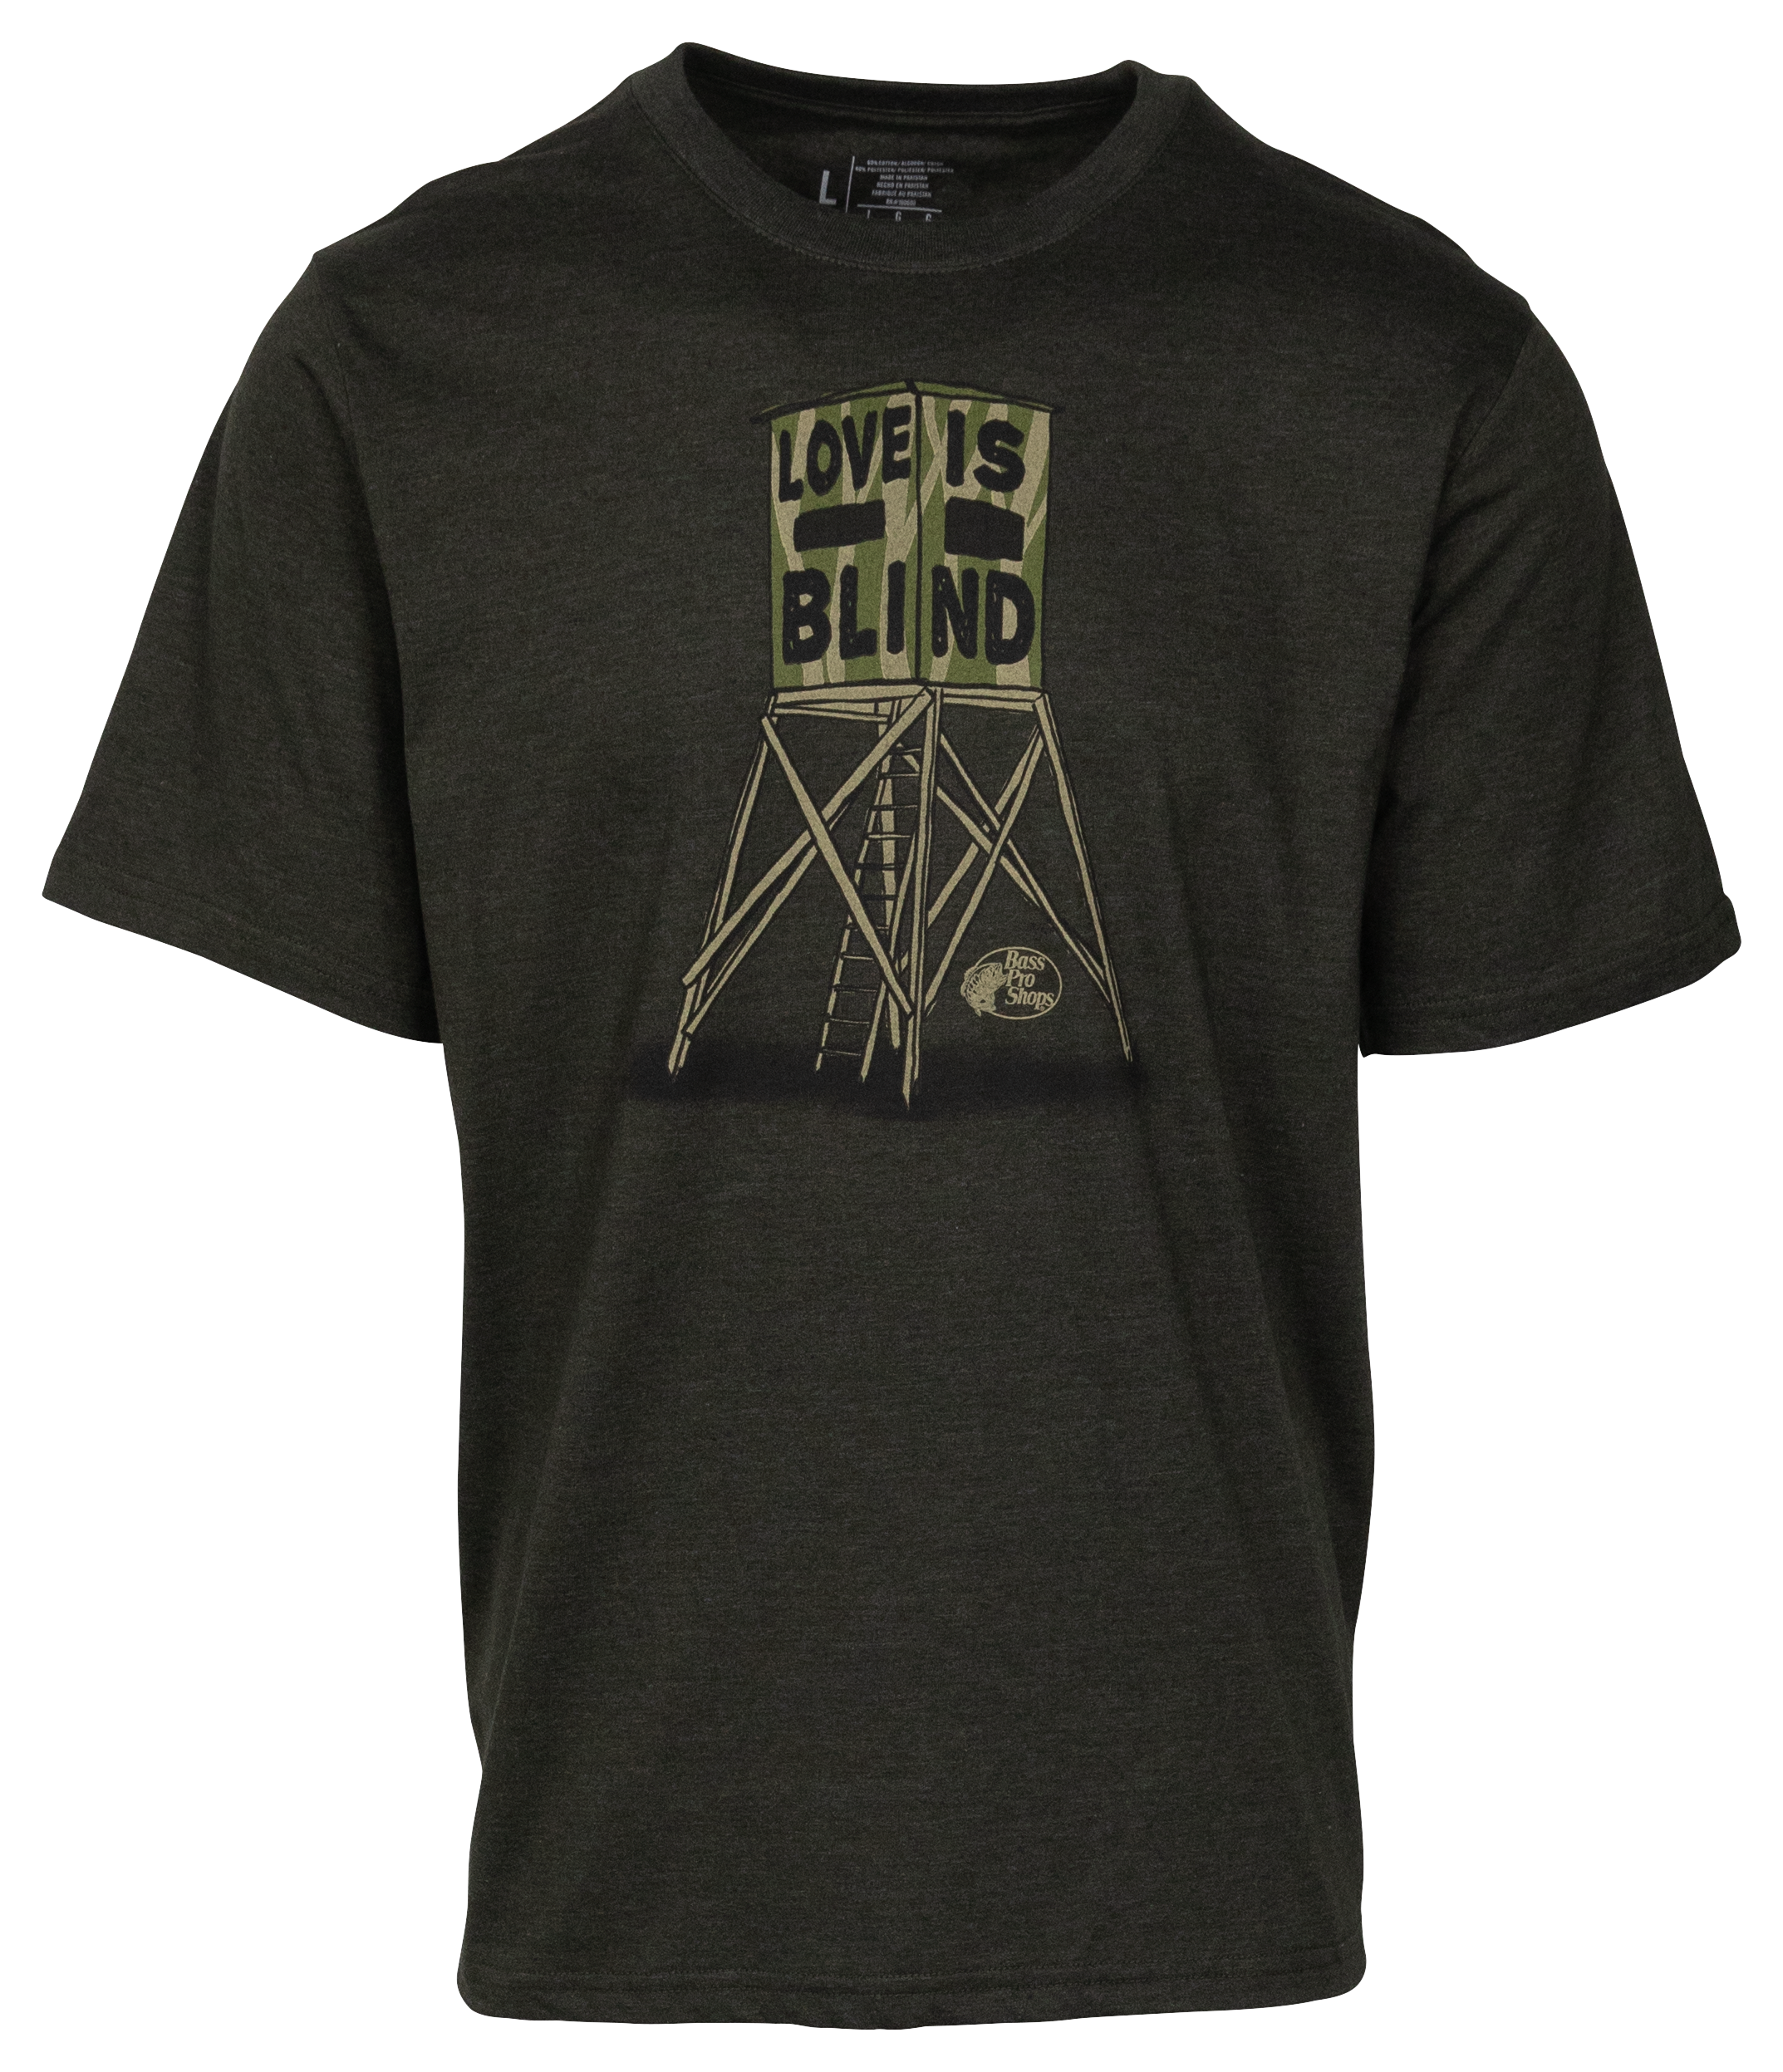 Bass Pro Shops Love Is Blind Short-Sleeve T-Shirt for Men - Olive Heather - XL